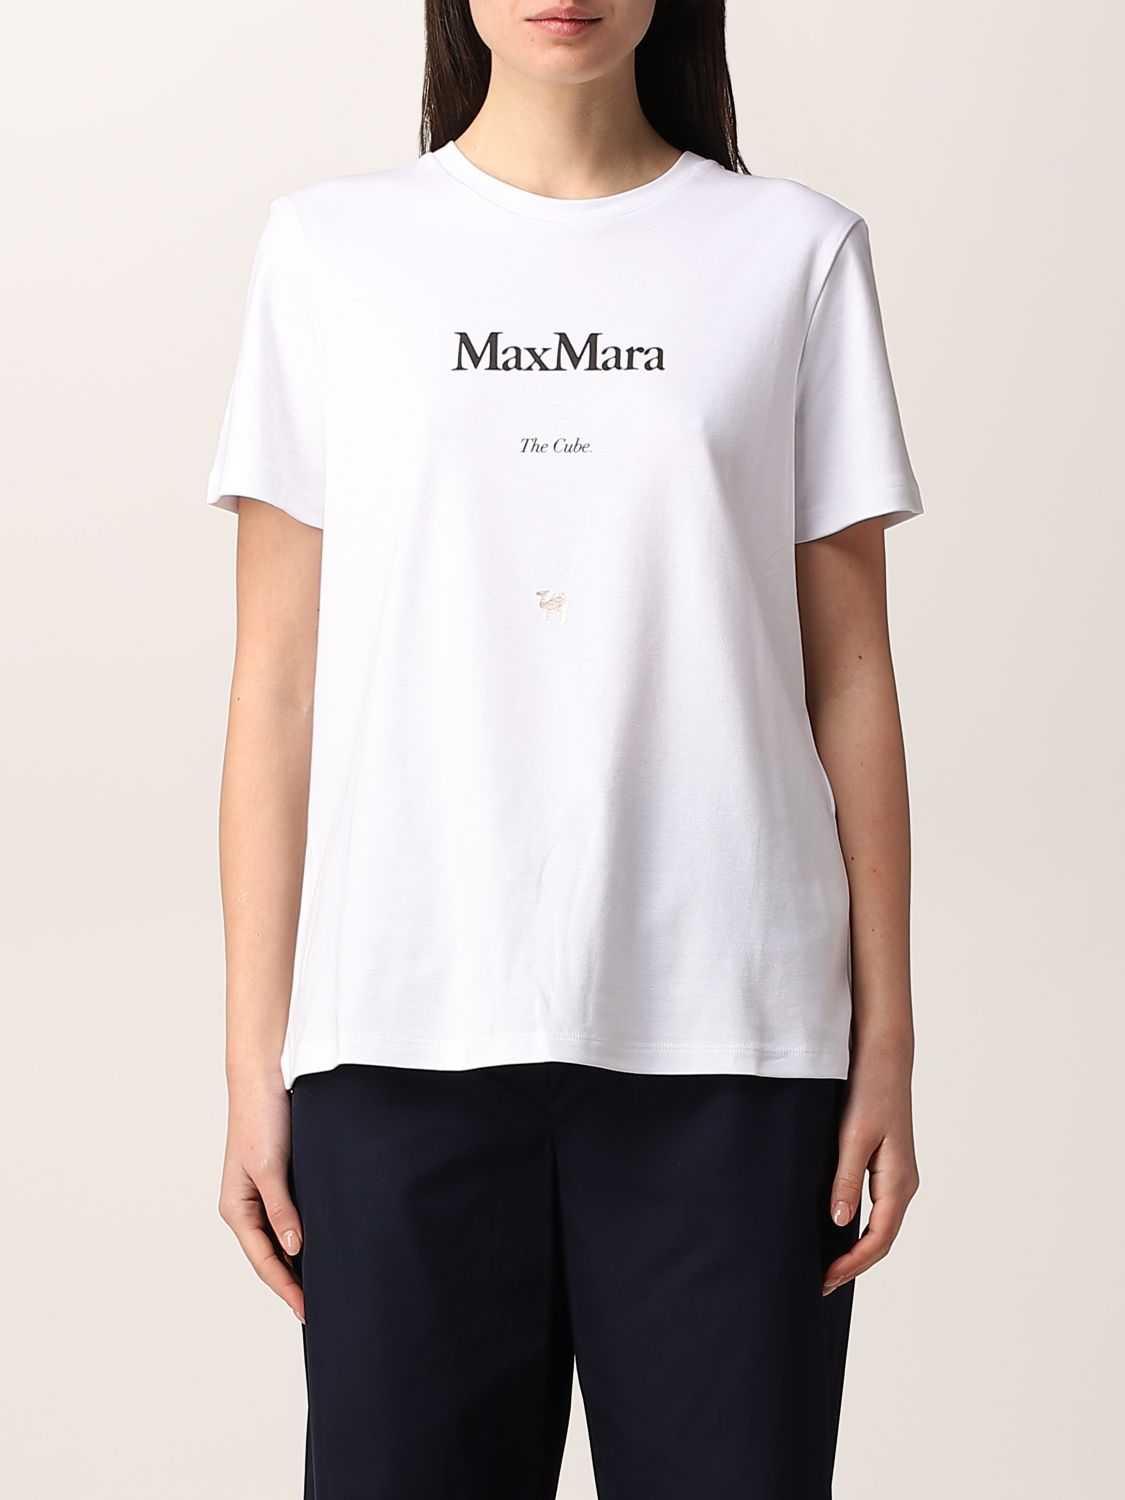 maxmara tシャツ